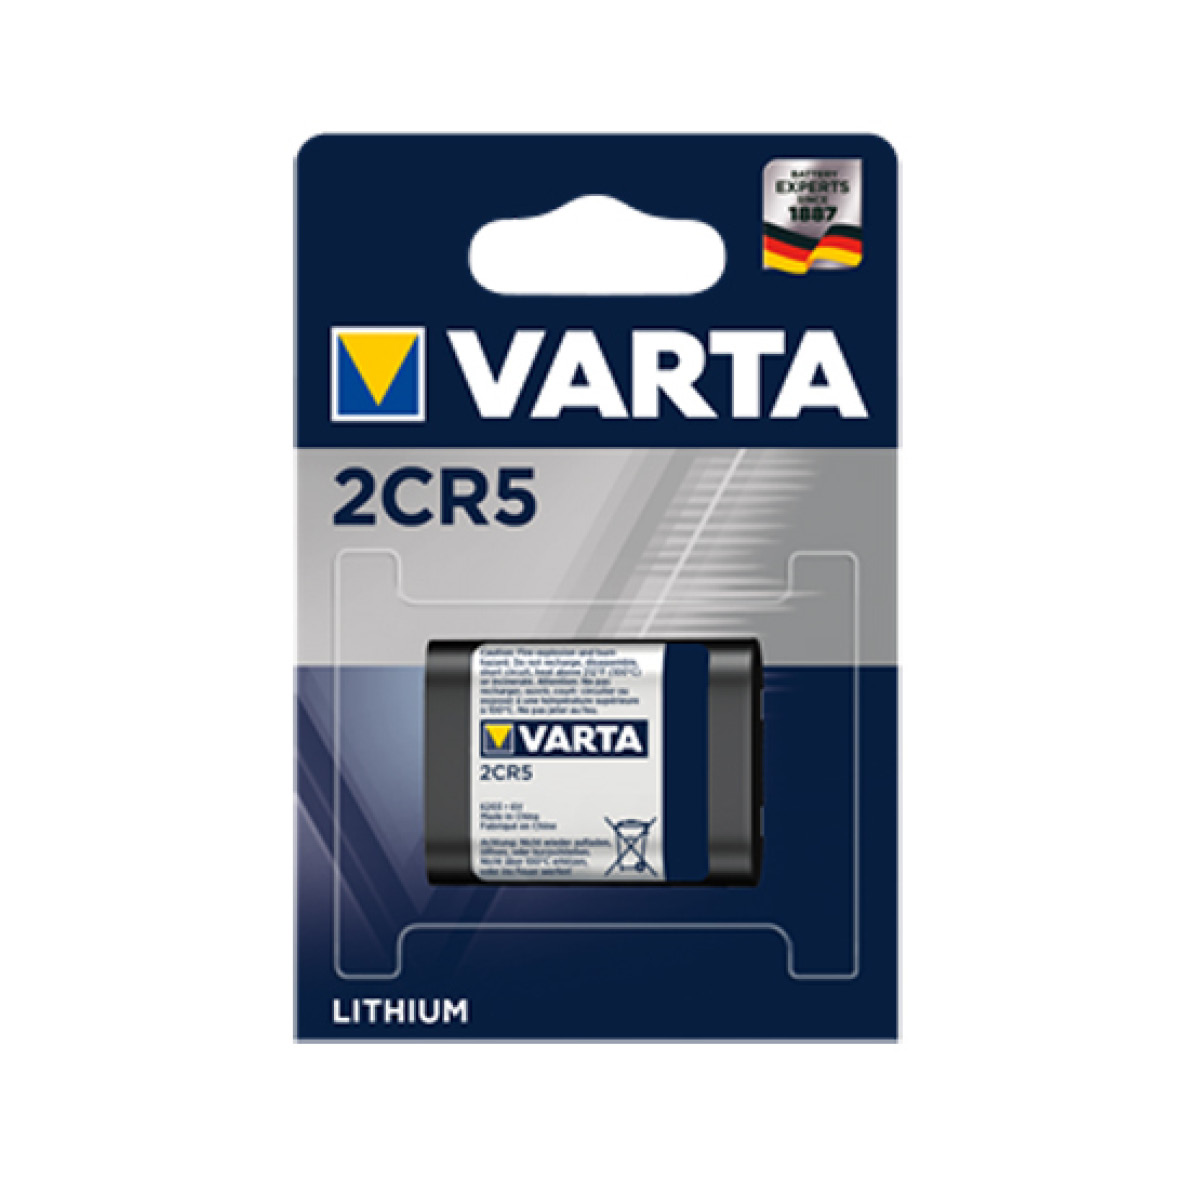 Varta Professional Lithium 2CR5 Batterie